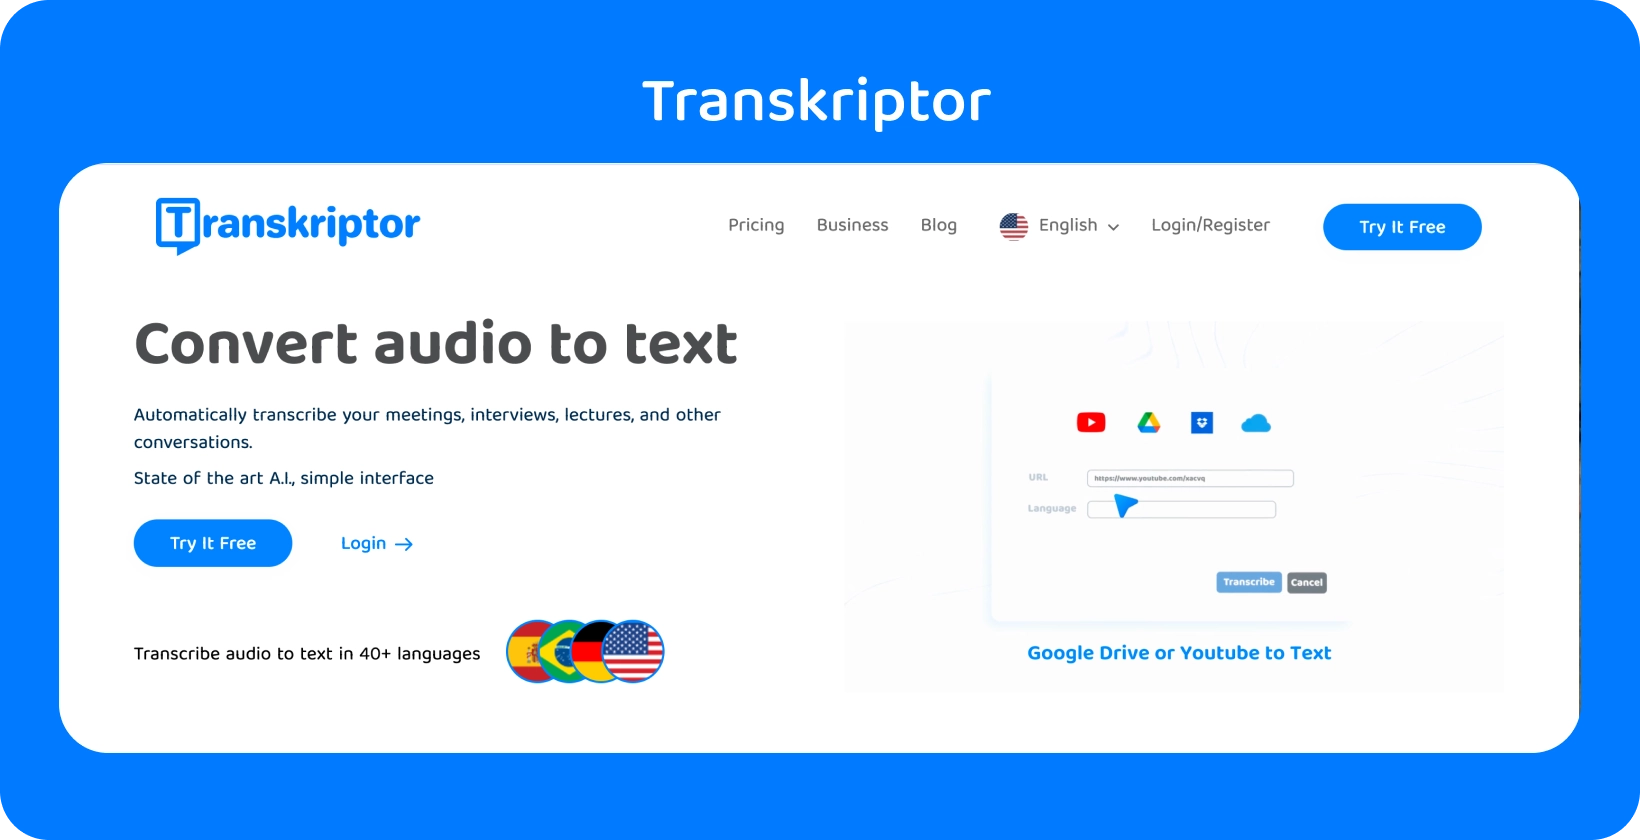 TranskriptorのWebページでは、「音声をテキストに変換」機能について言及しており、簡単に文字起こしする準備ができています。